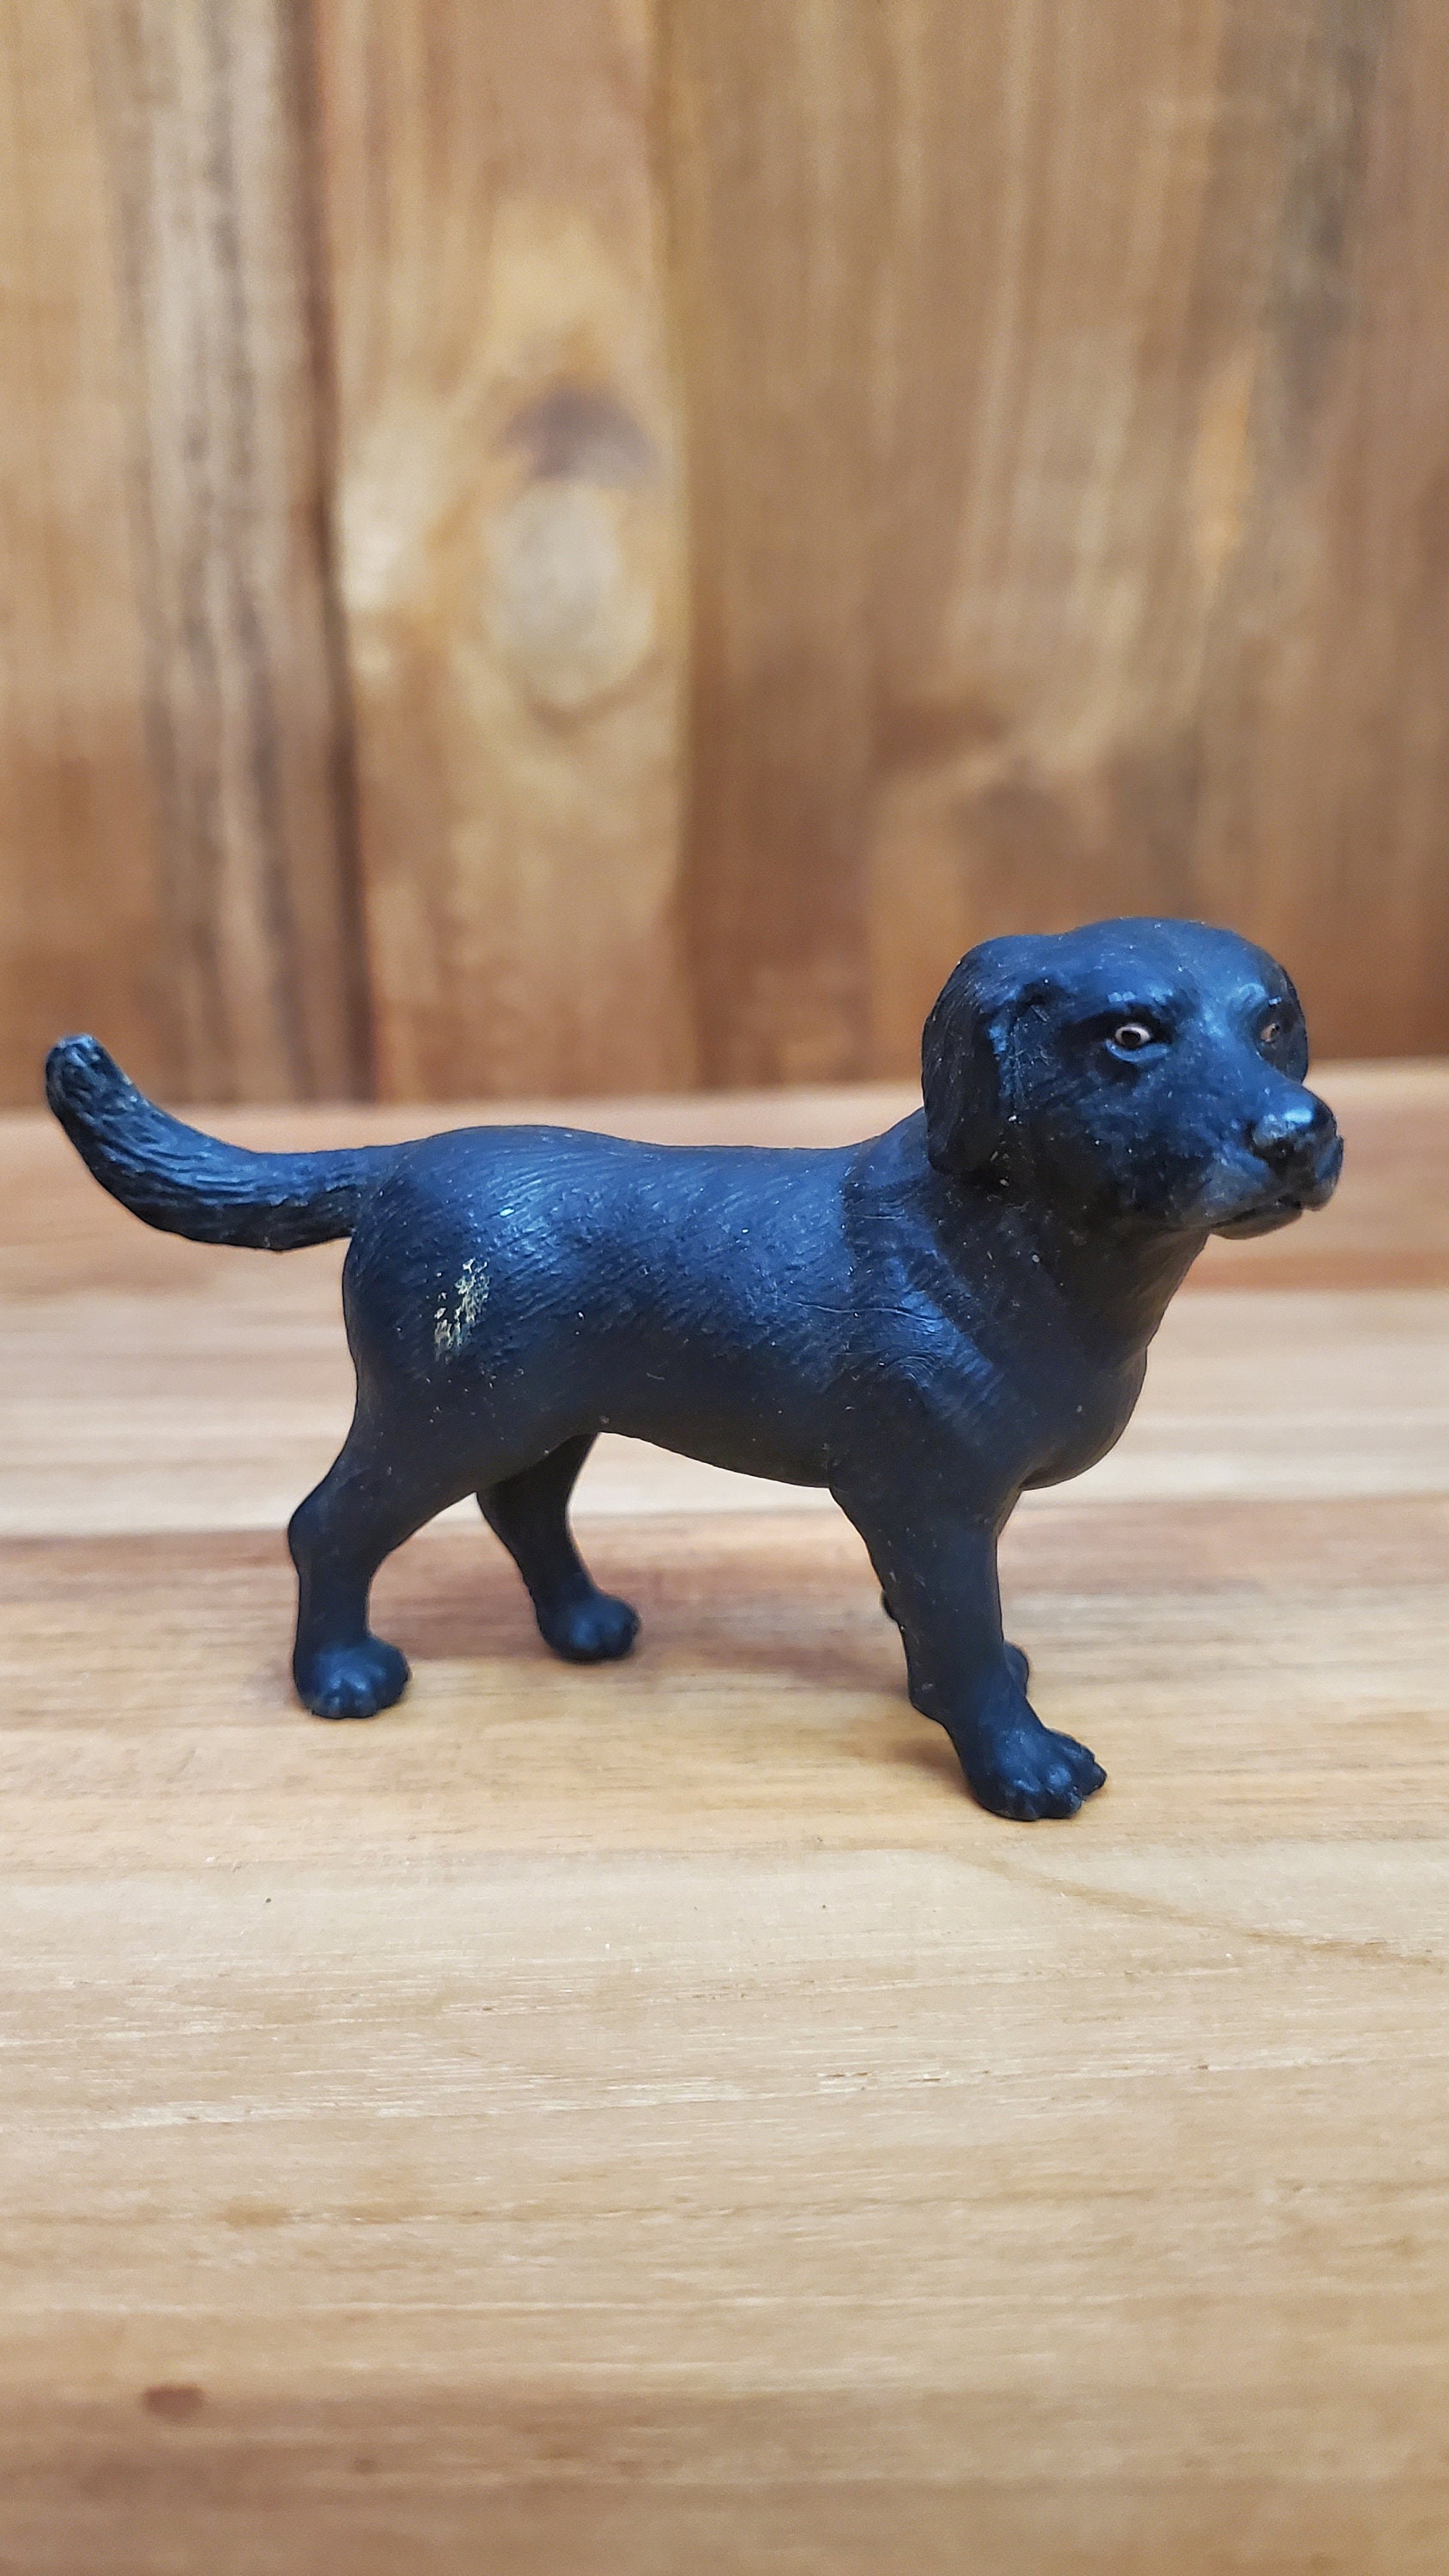 Schleich Figurine chien bouledogue français 13877